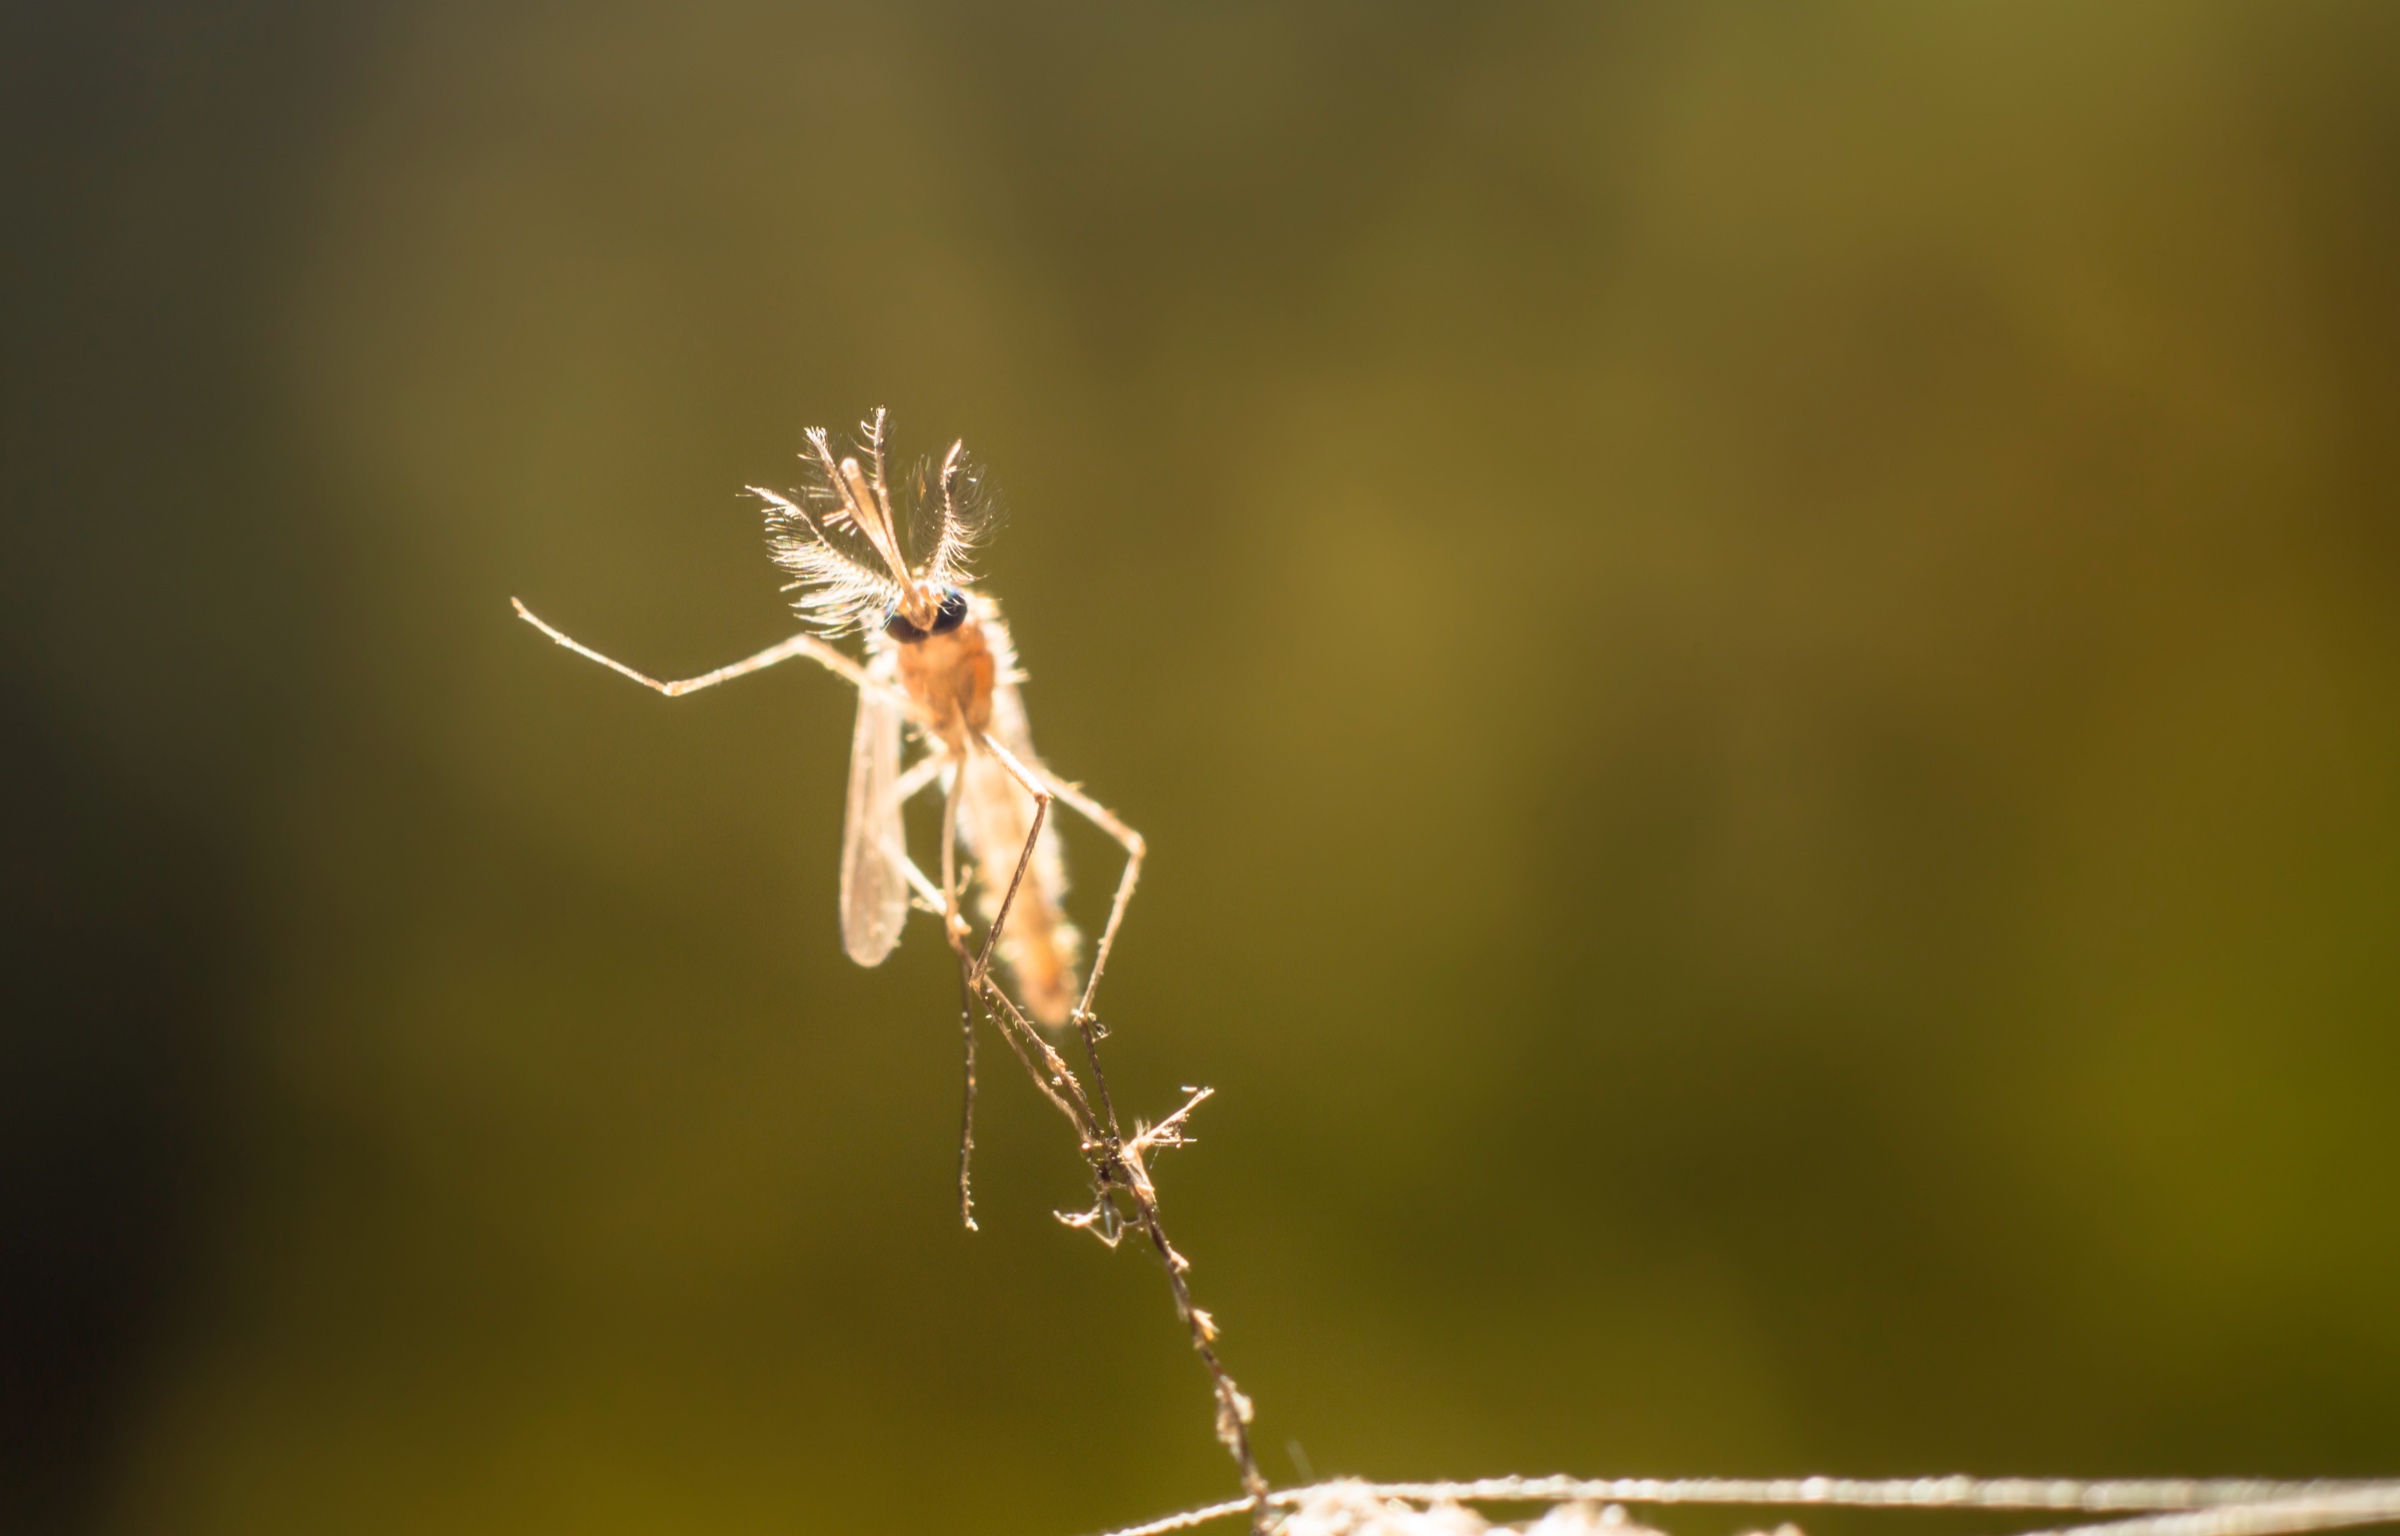 The rising problem of mosquito borne diseases